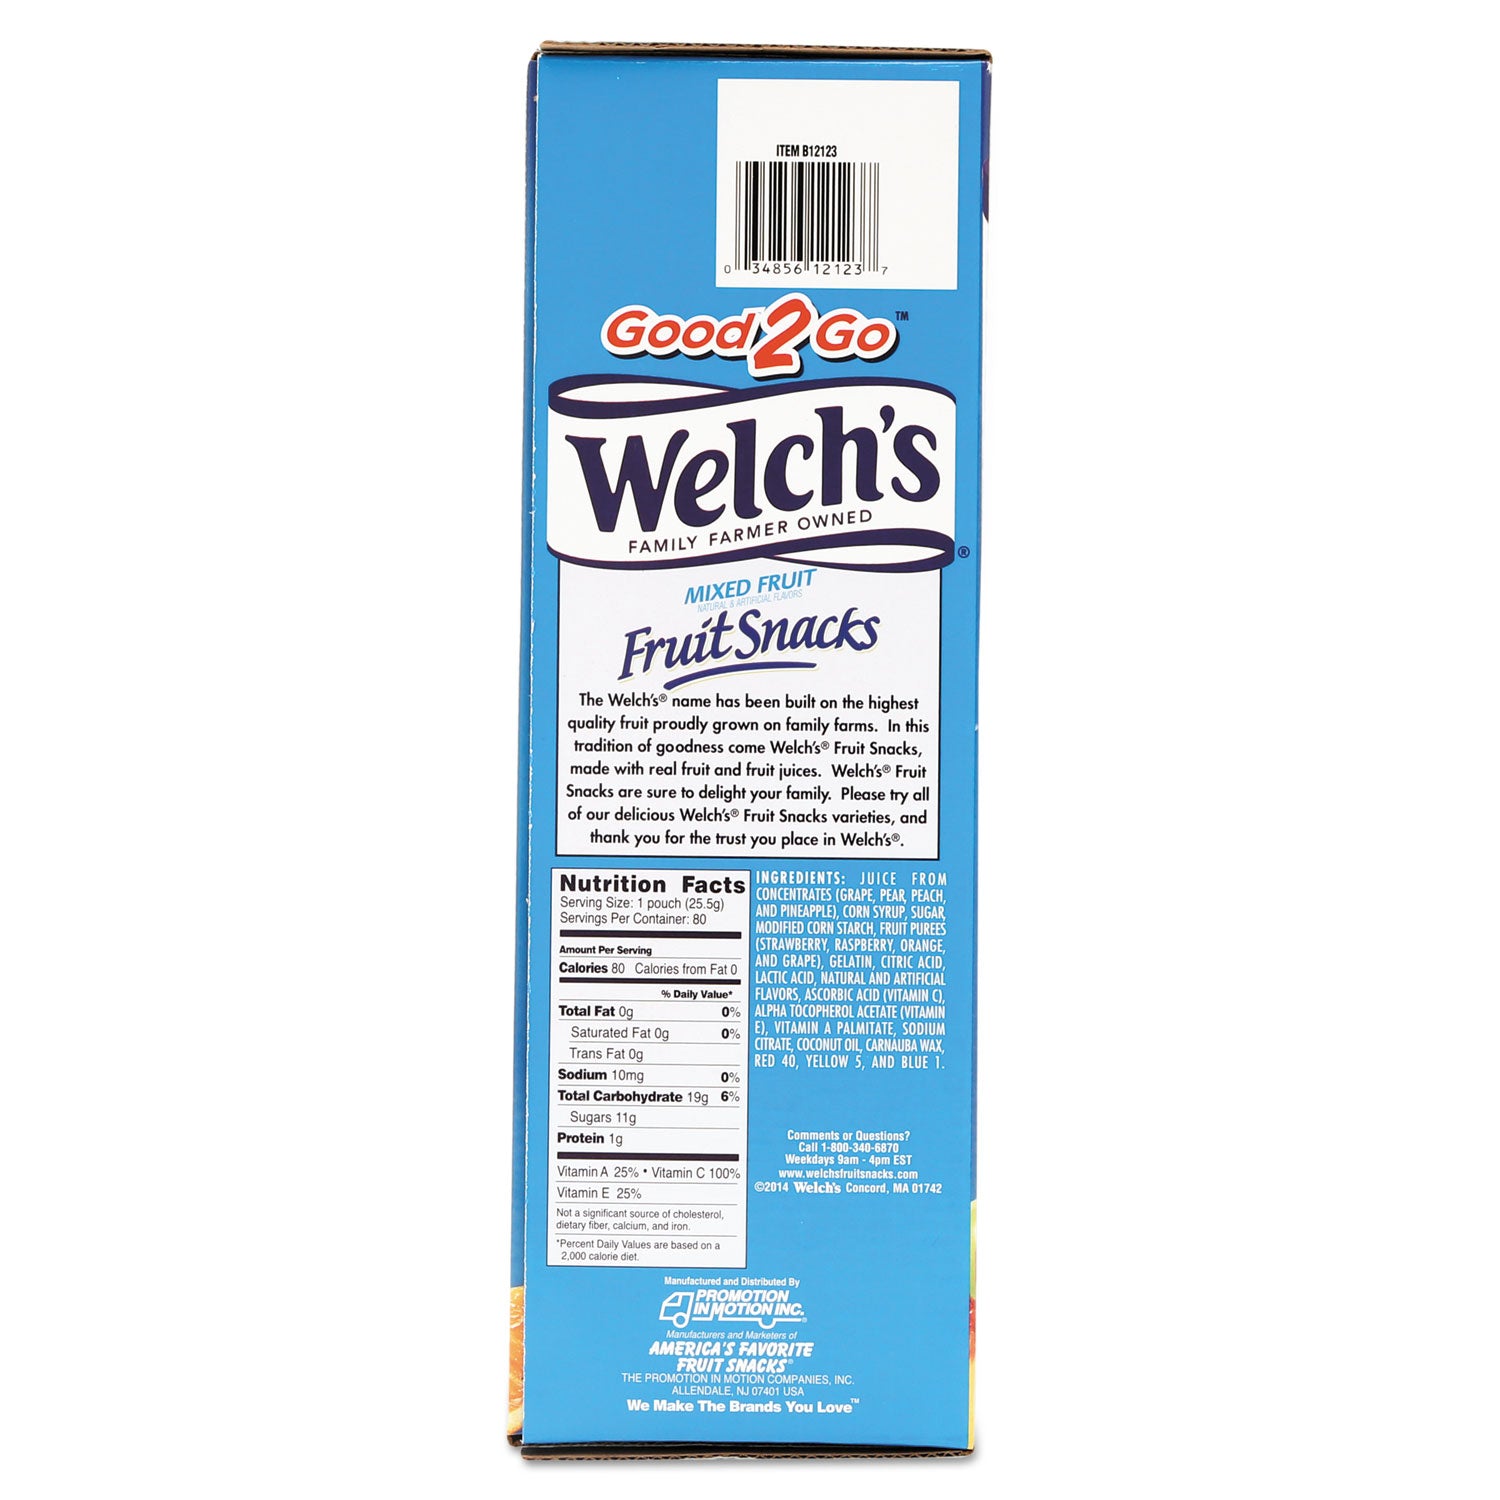 Welch's Fruit Snacks 10 ct .9 oz Packs